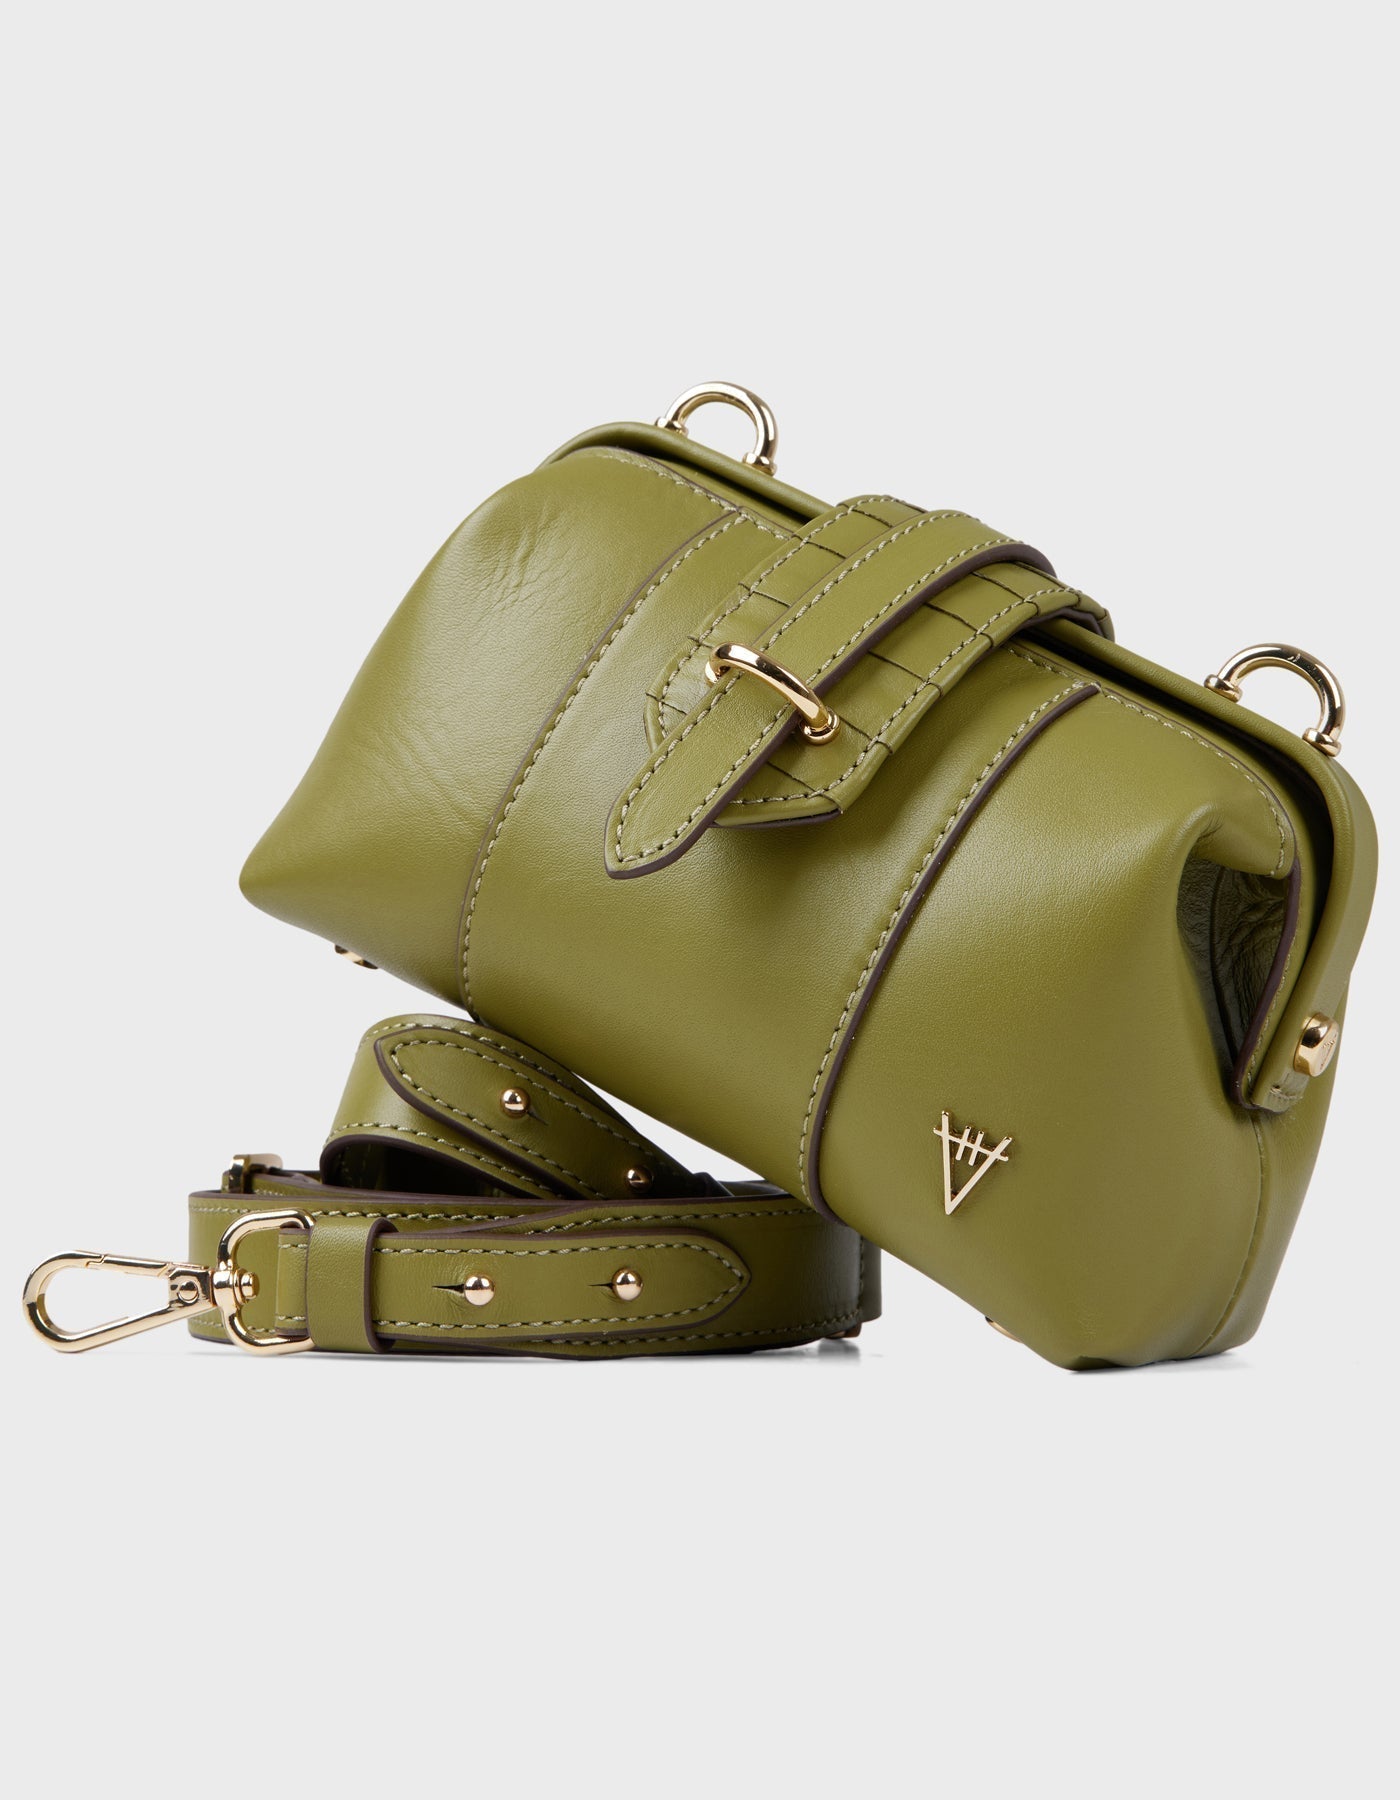 HiVa Atelier | Mini Nubes Doctor Bag Olive | Beautiful and Versatile Leather Accessories